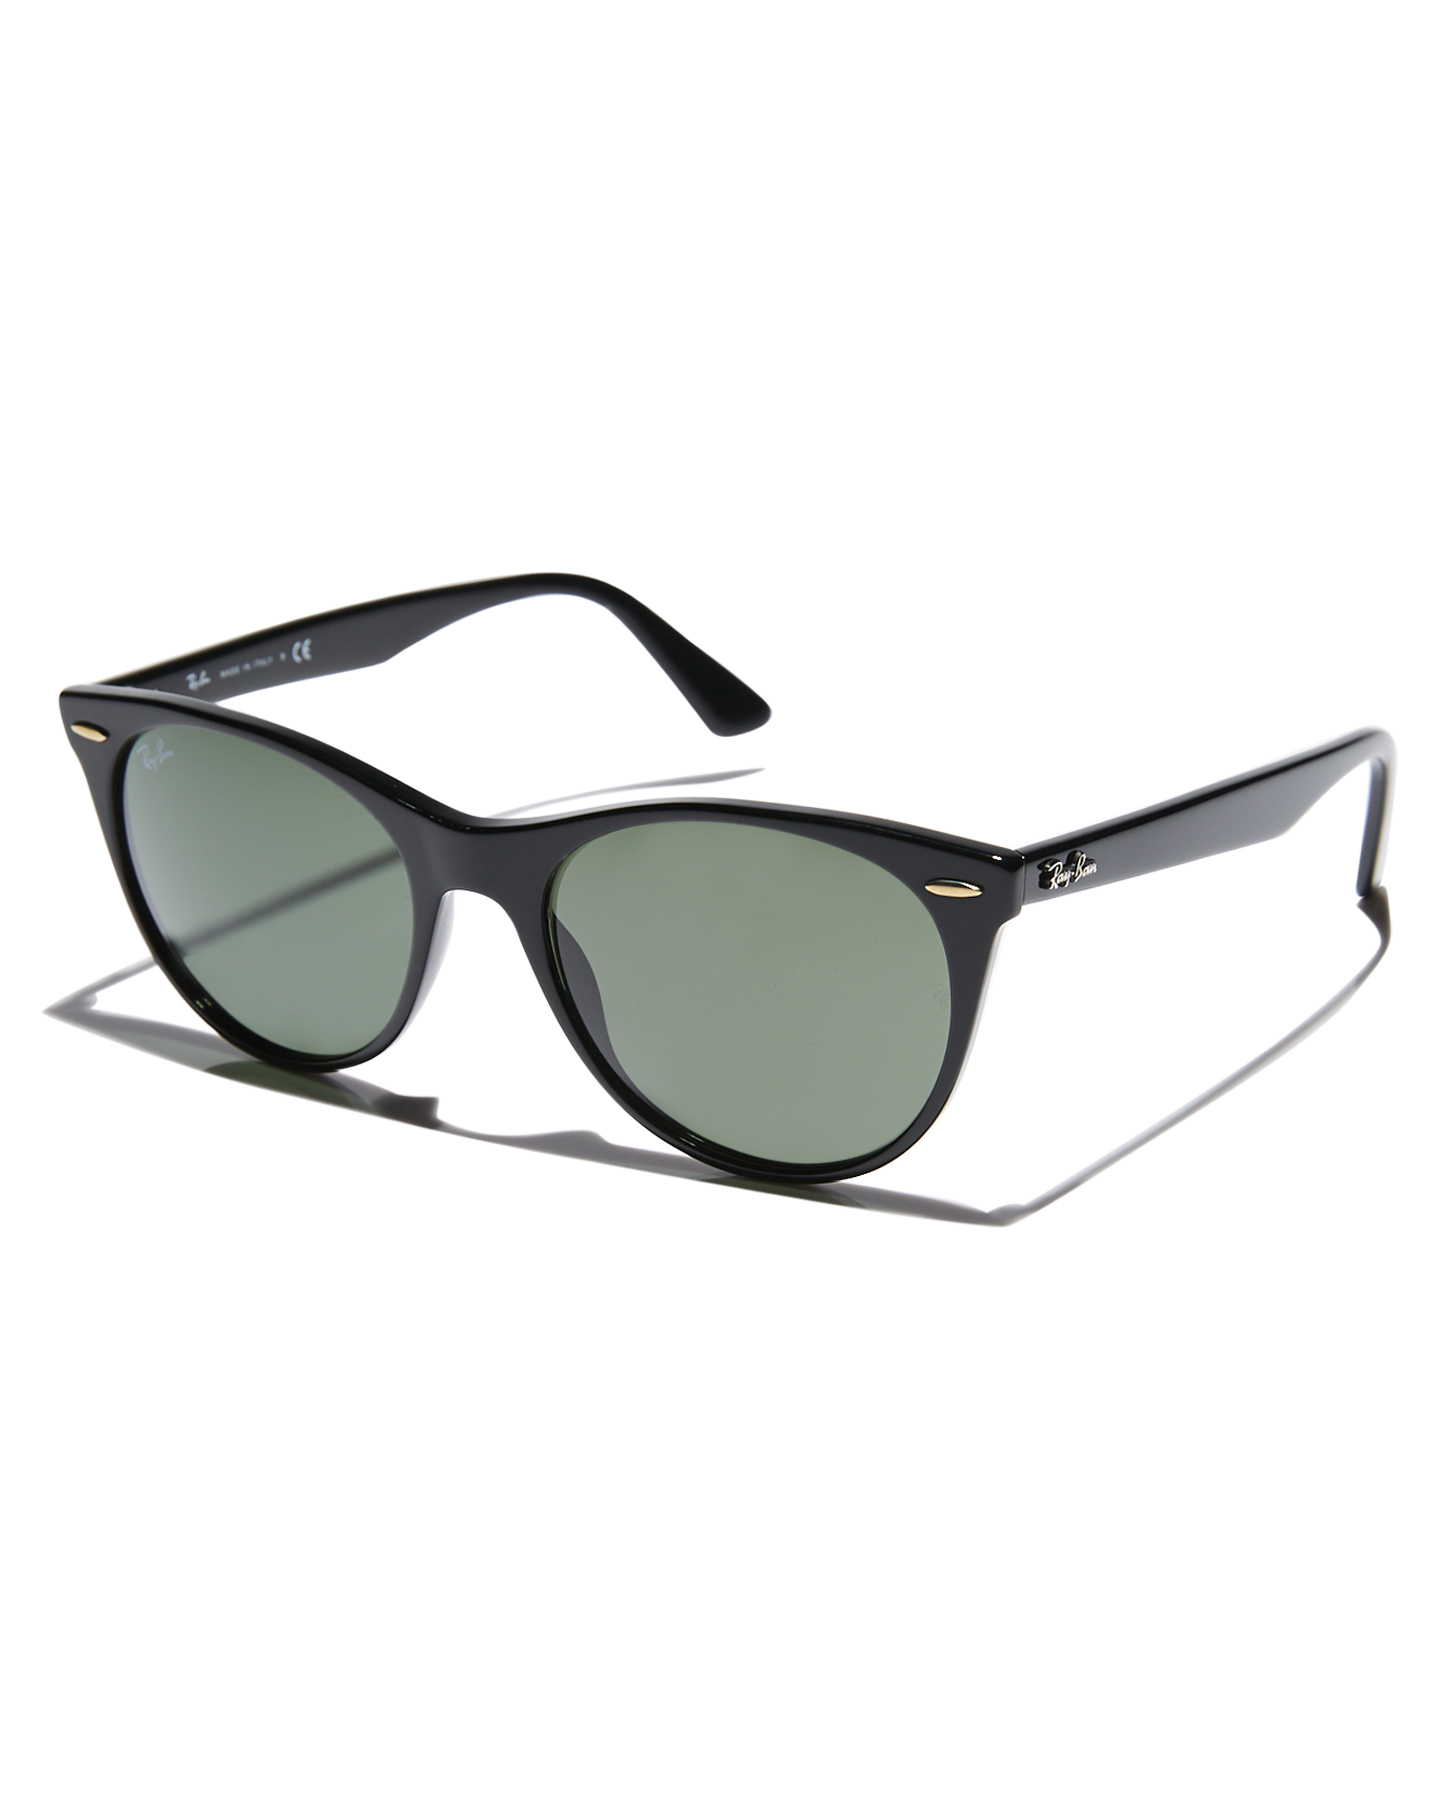 ray ban sunglasses sale $19.99 wayfarer